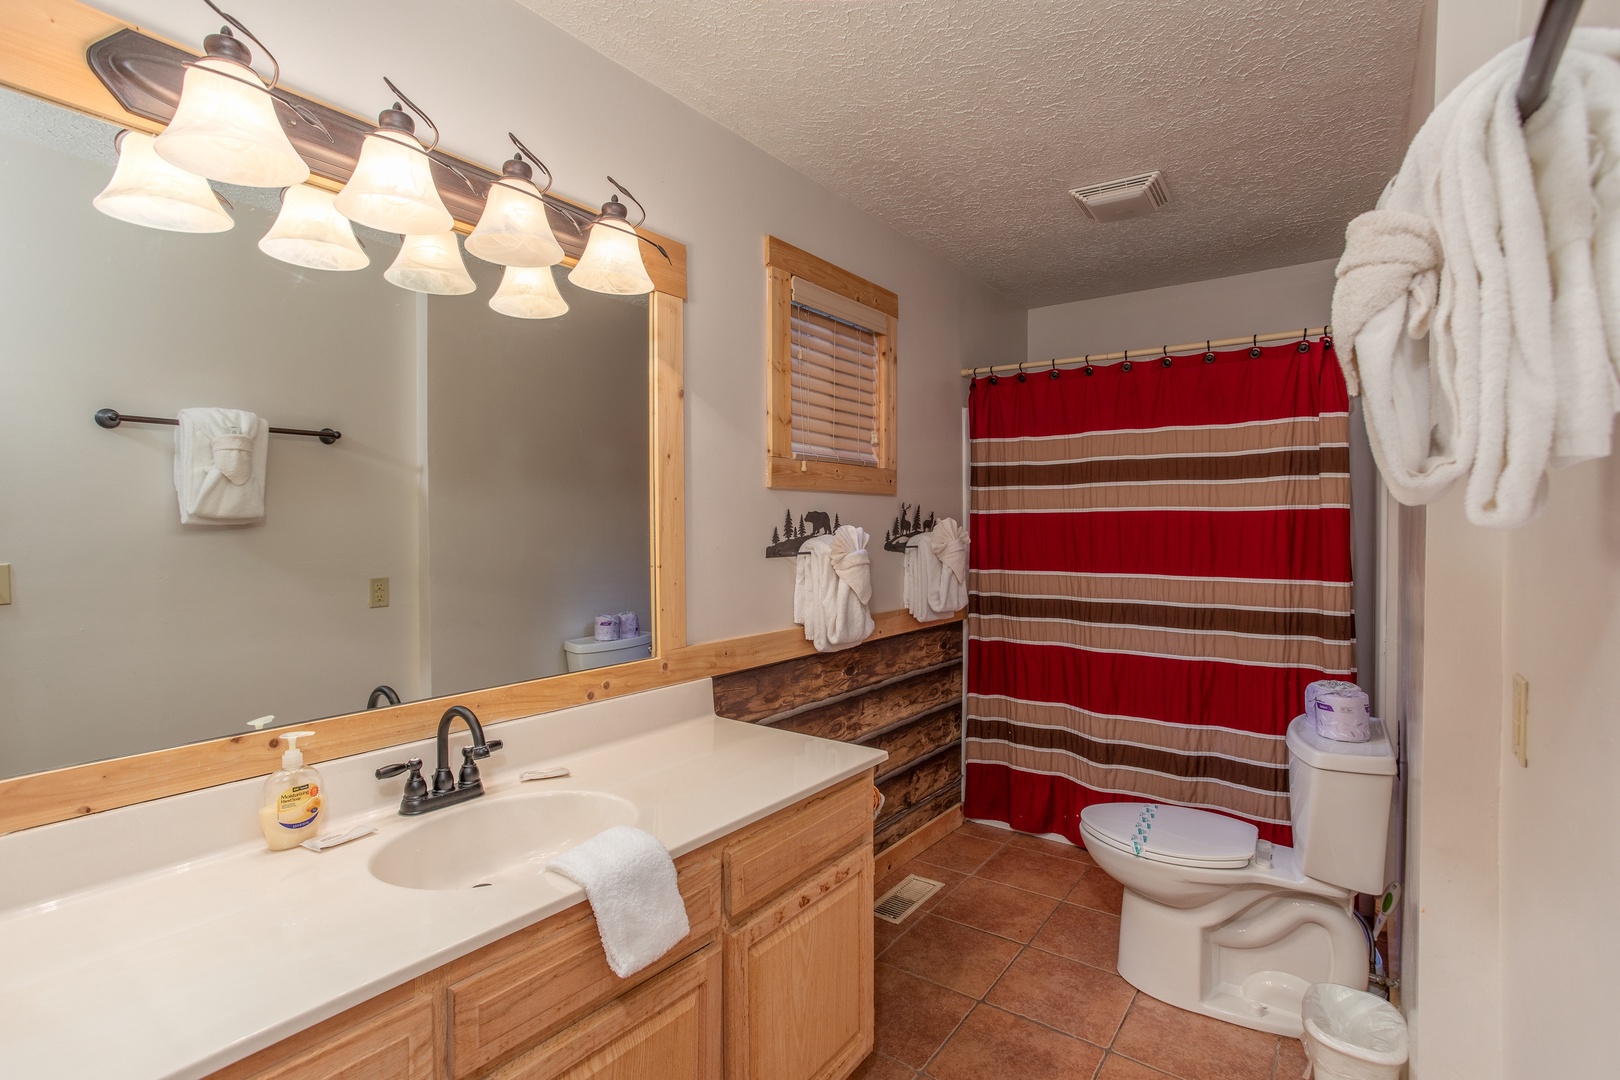 Bathroom at Bushwood Lodge, a 3-bedroom cabin rental located in Gatlinburg